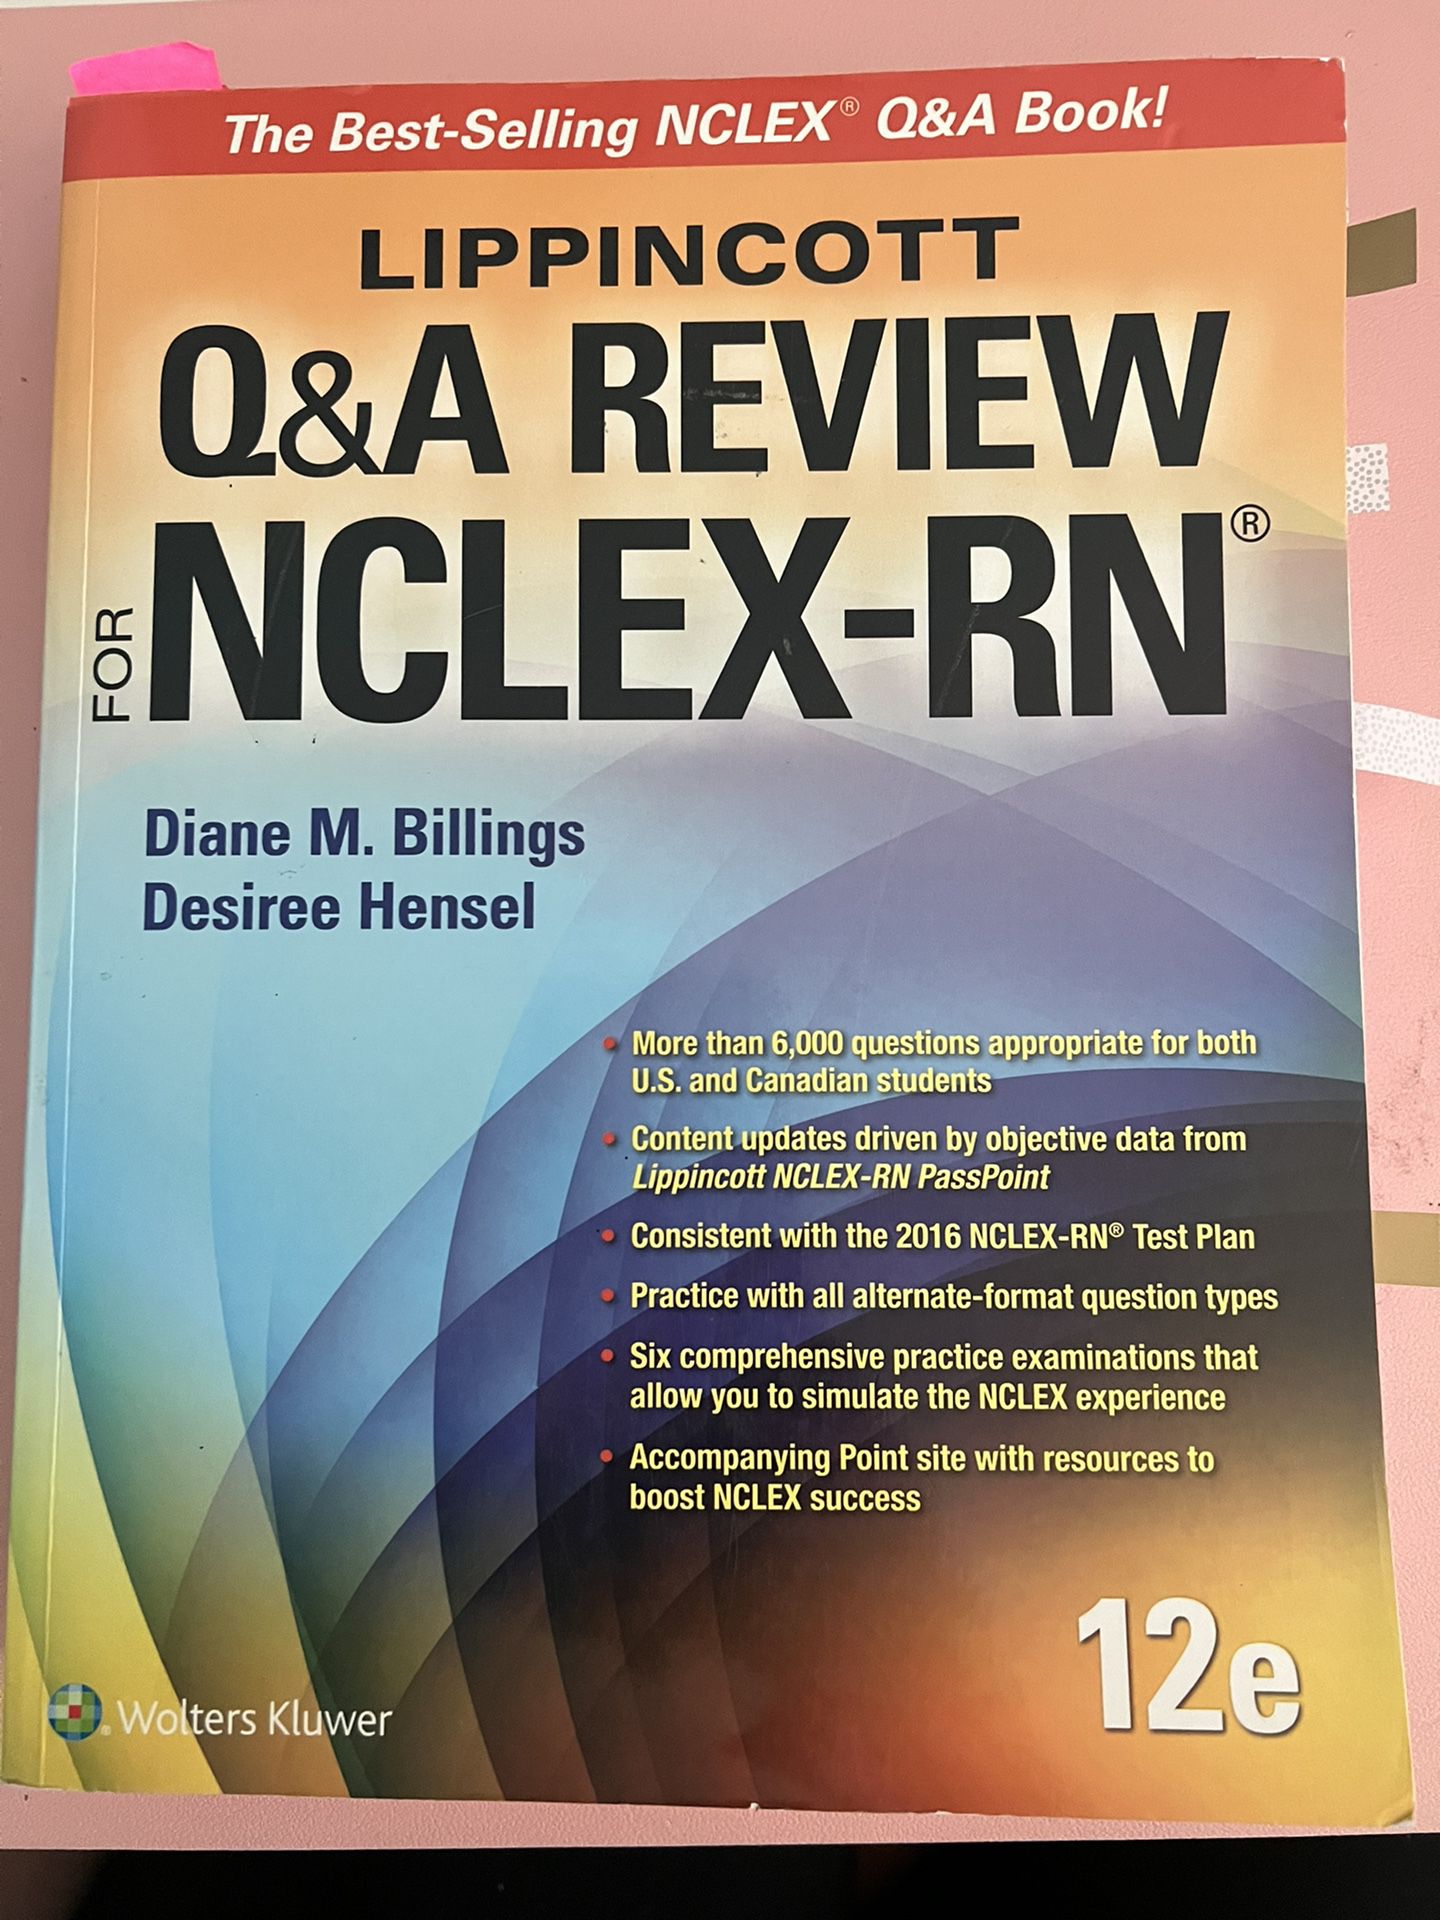 Lippincott Q&A Review for NCLEX-RN 